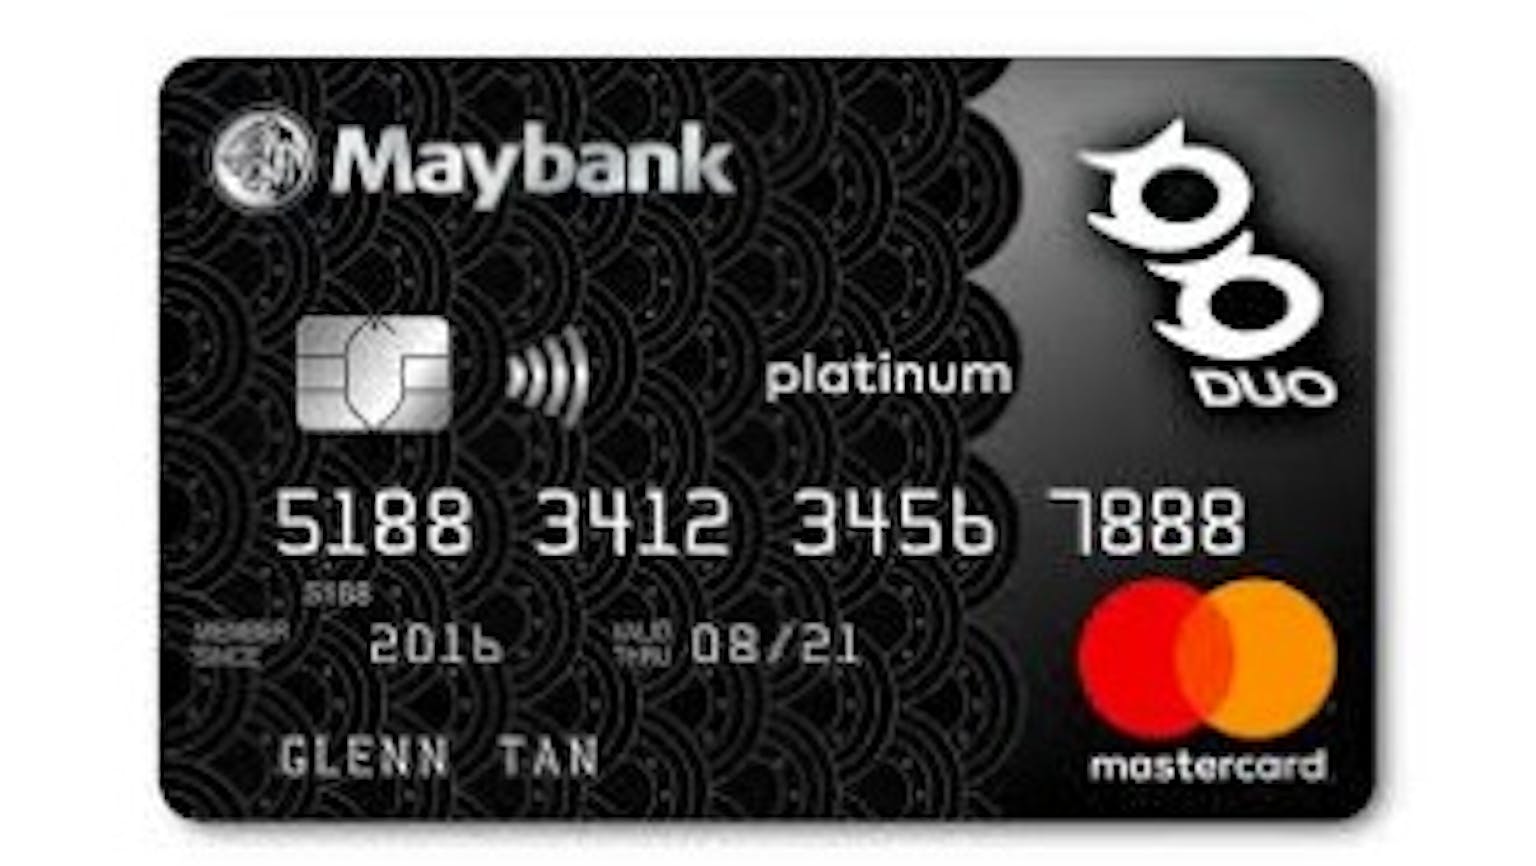 Maybank DUO Platinum Mastercard